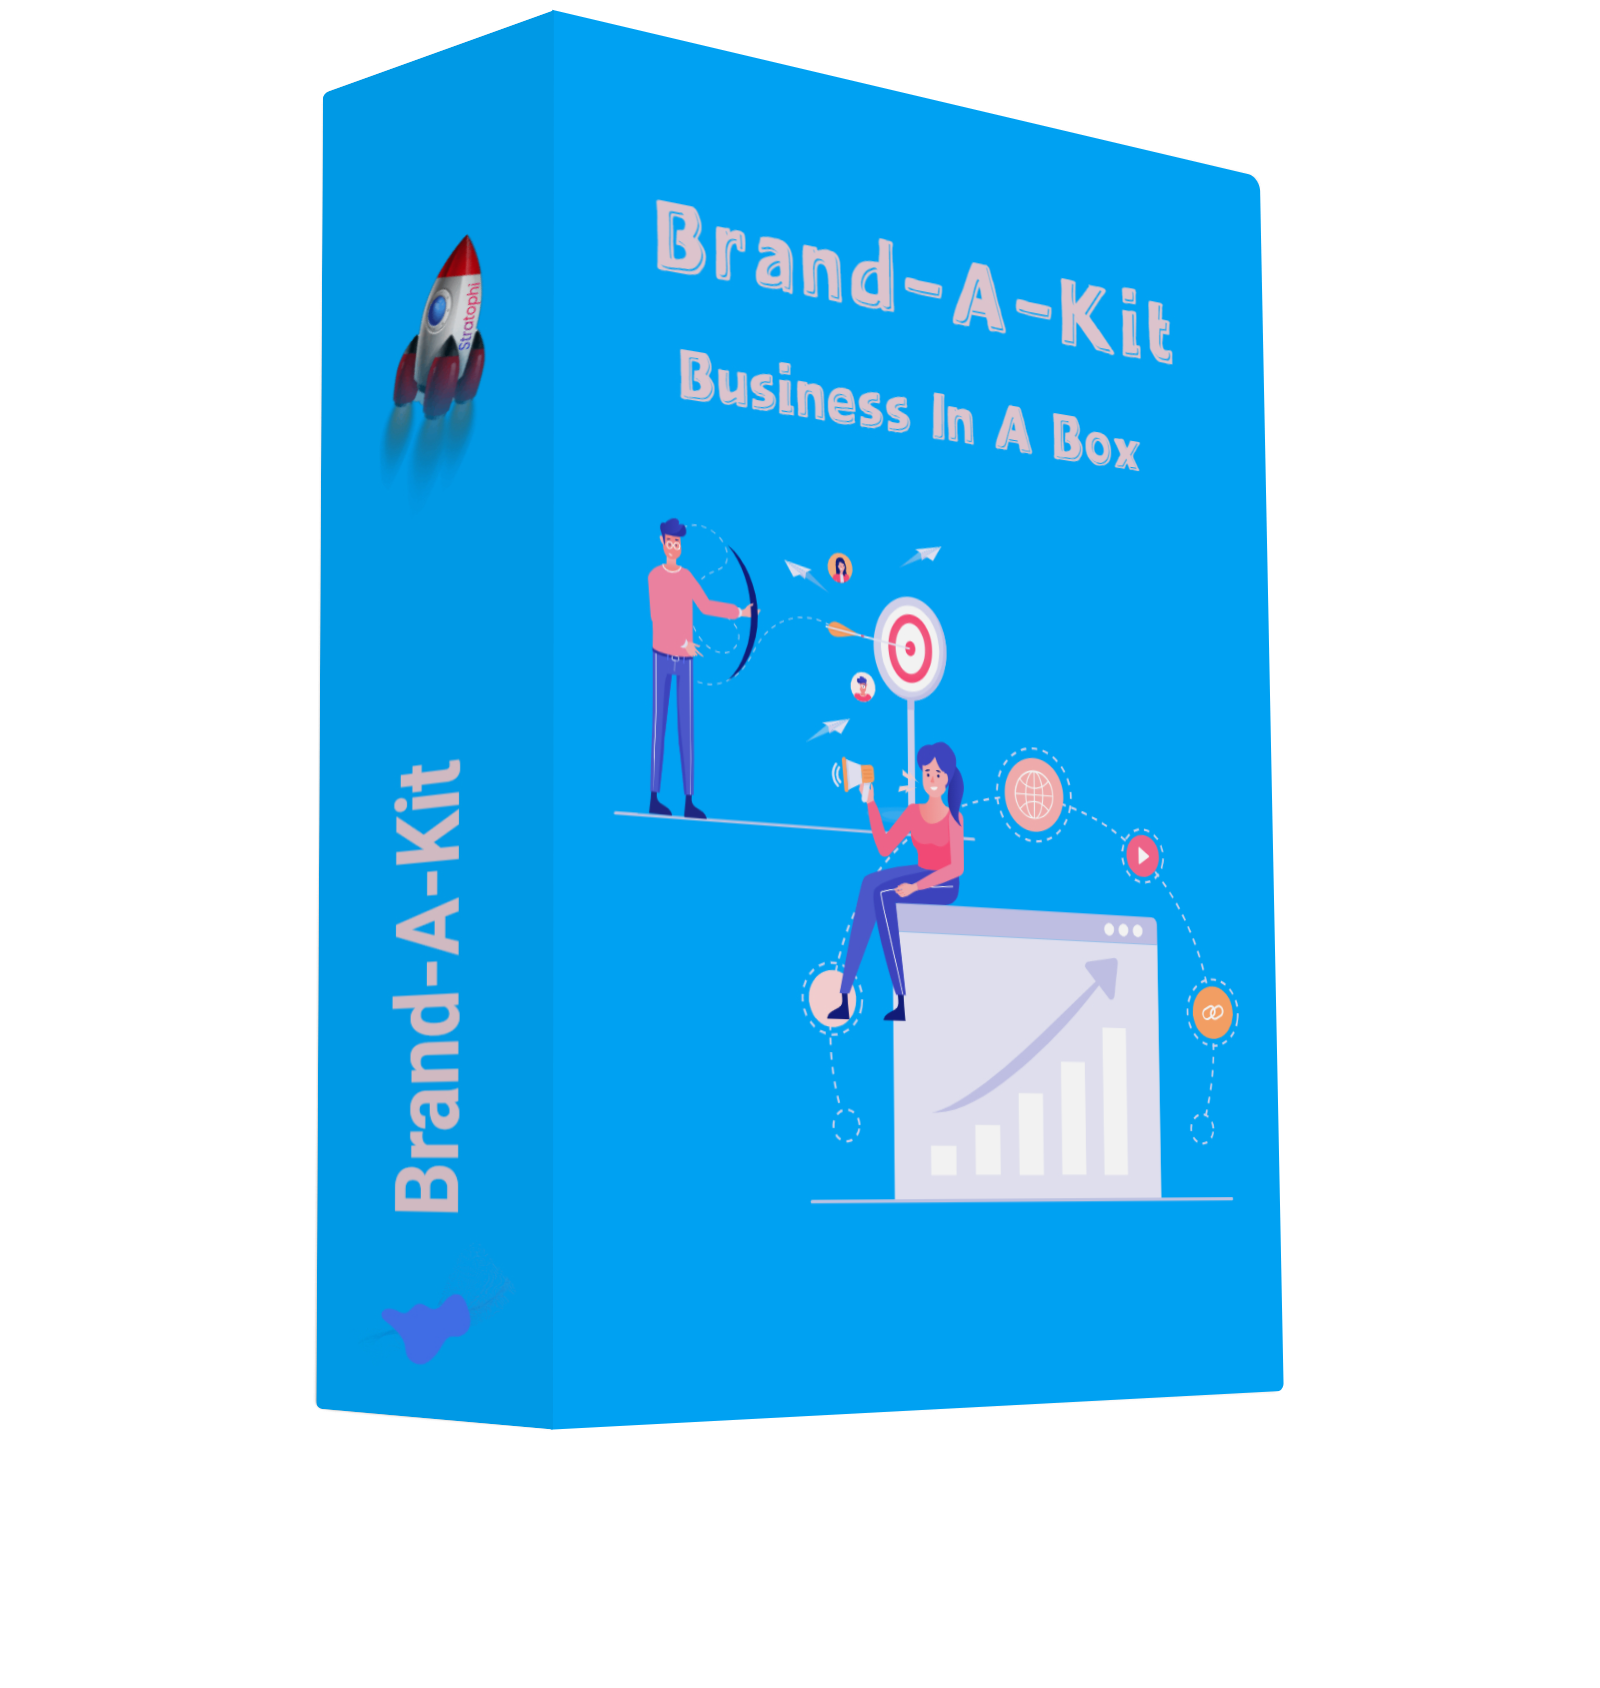 Brandakit business in a box